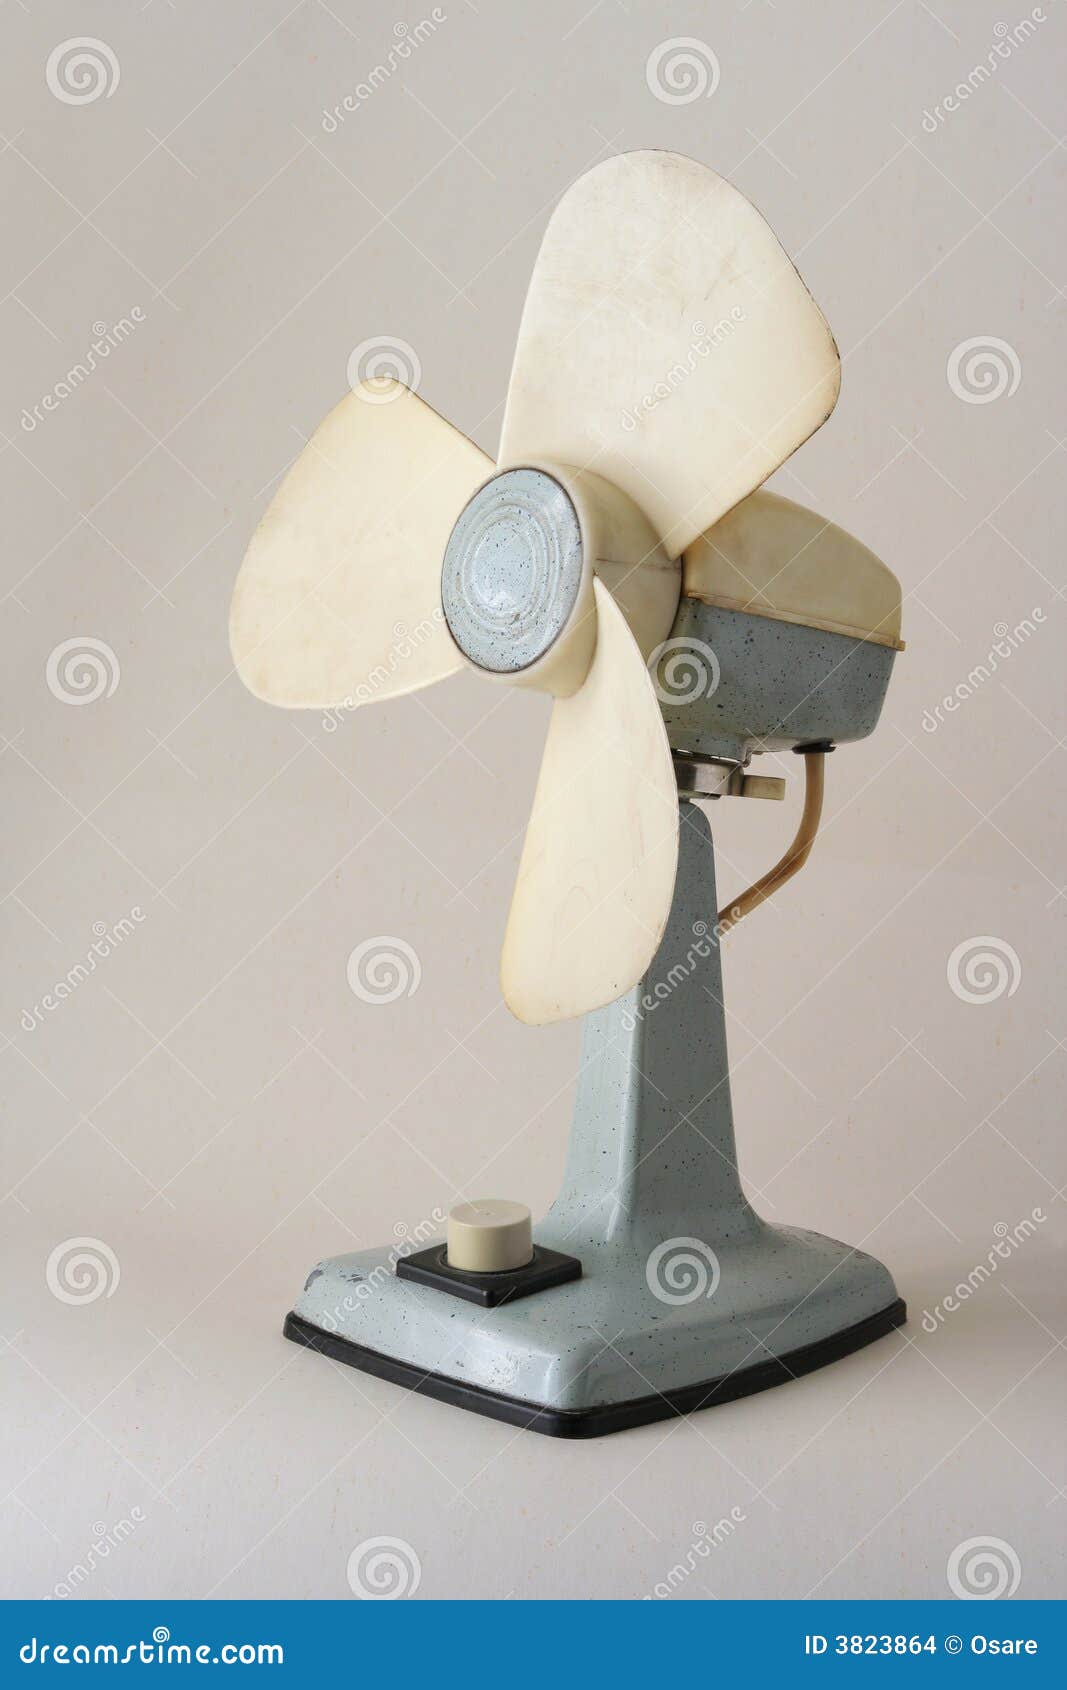 retro style ventilator